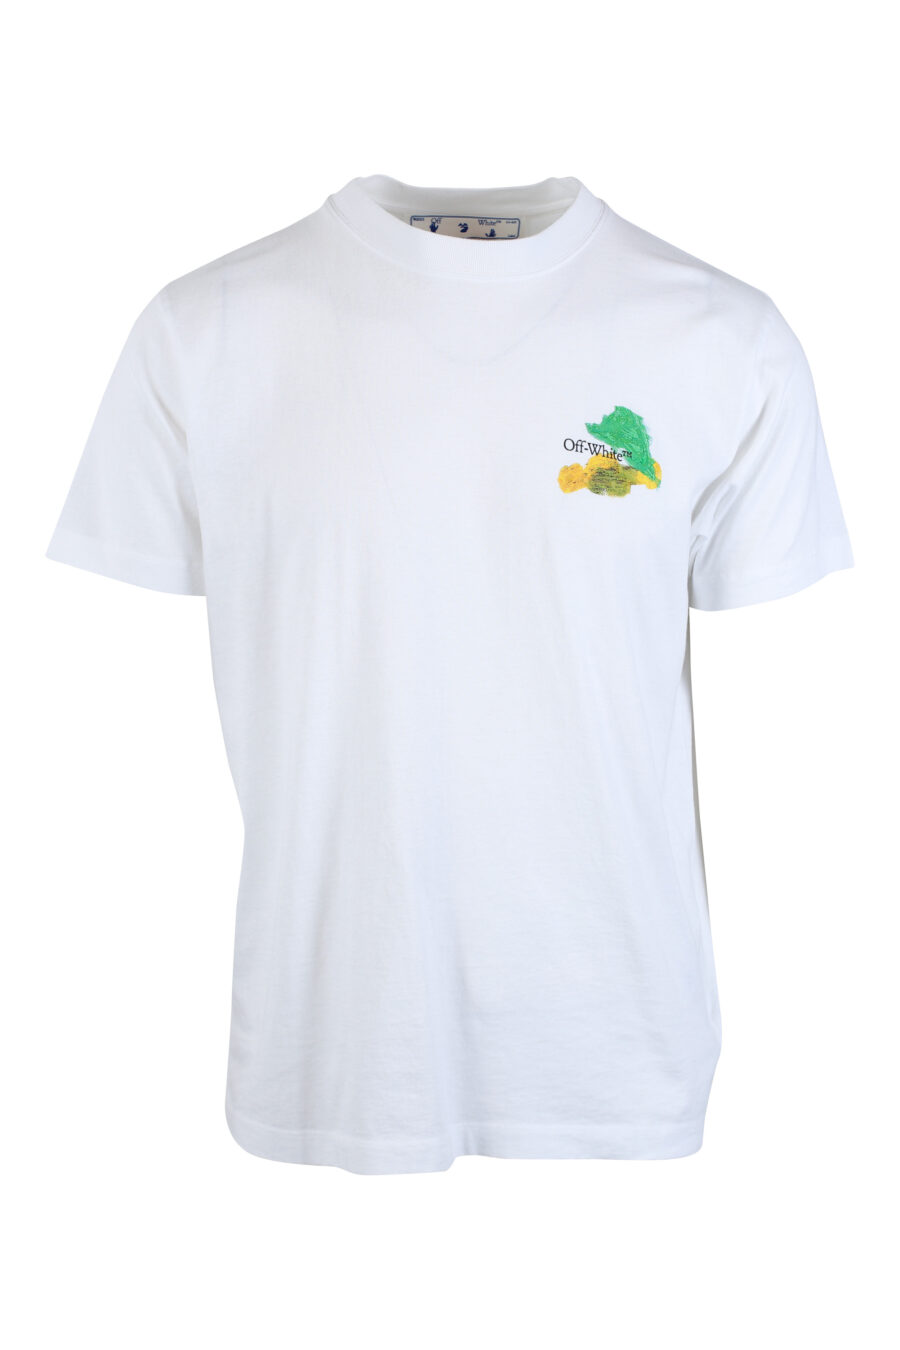 Camiseta blanca con maxilogo "arrow" multicolor por detrás - IMG 2620